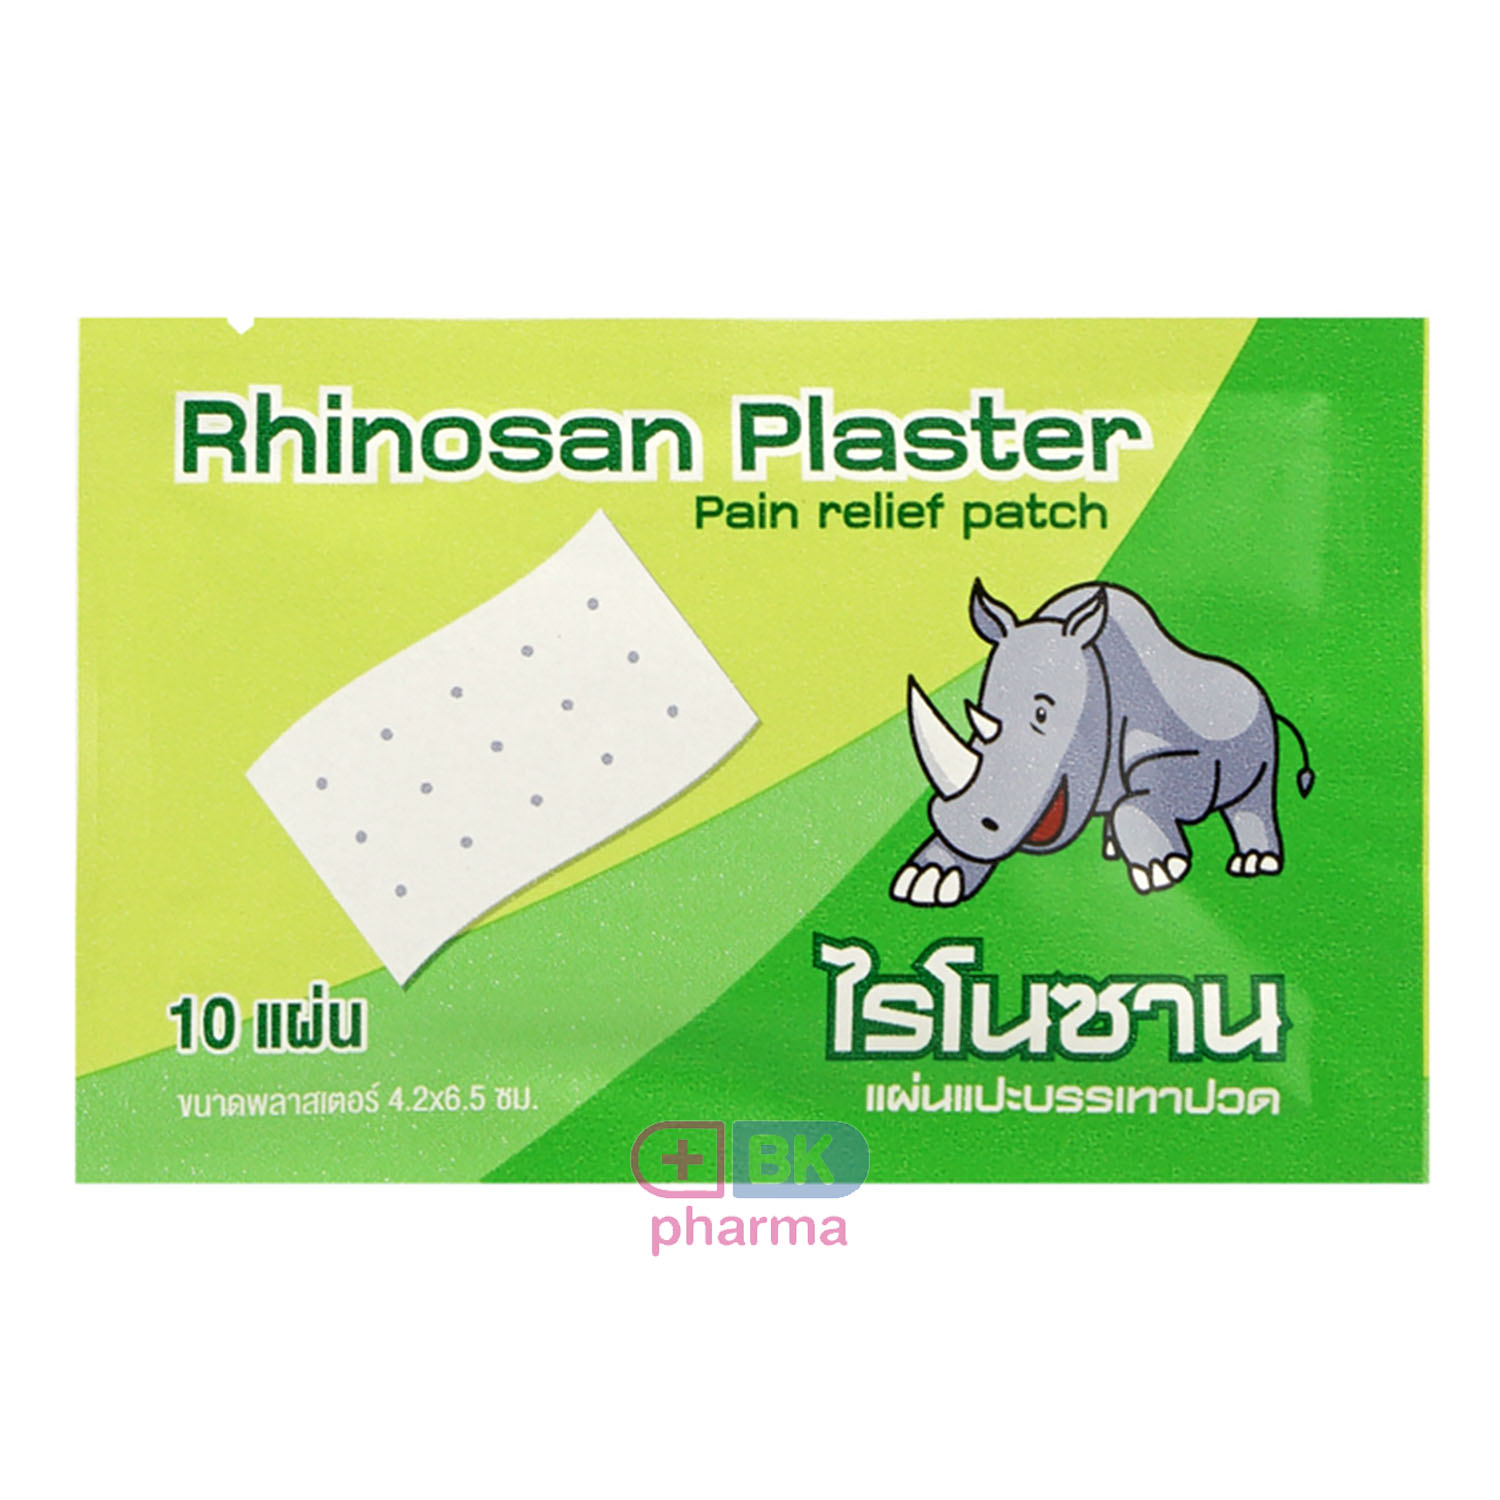 rhinosan-plaster-ไรโนซาน-neobun-กอเอี๊ยะ-พลาสเตอร์บรรเทาปวด-นีโอบัน-10แผ่น-ซอง-1-ซอง